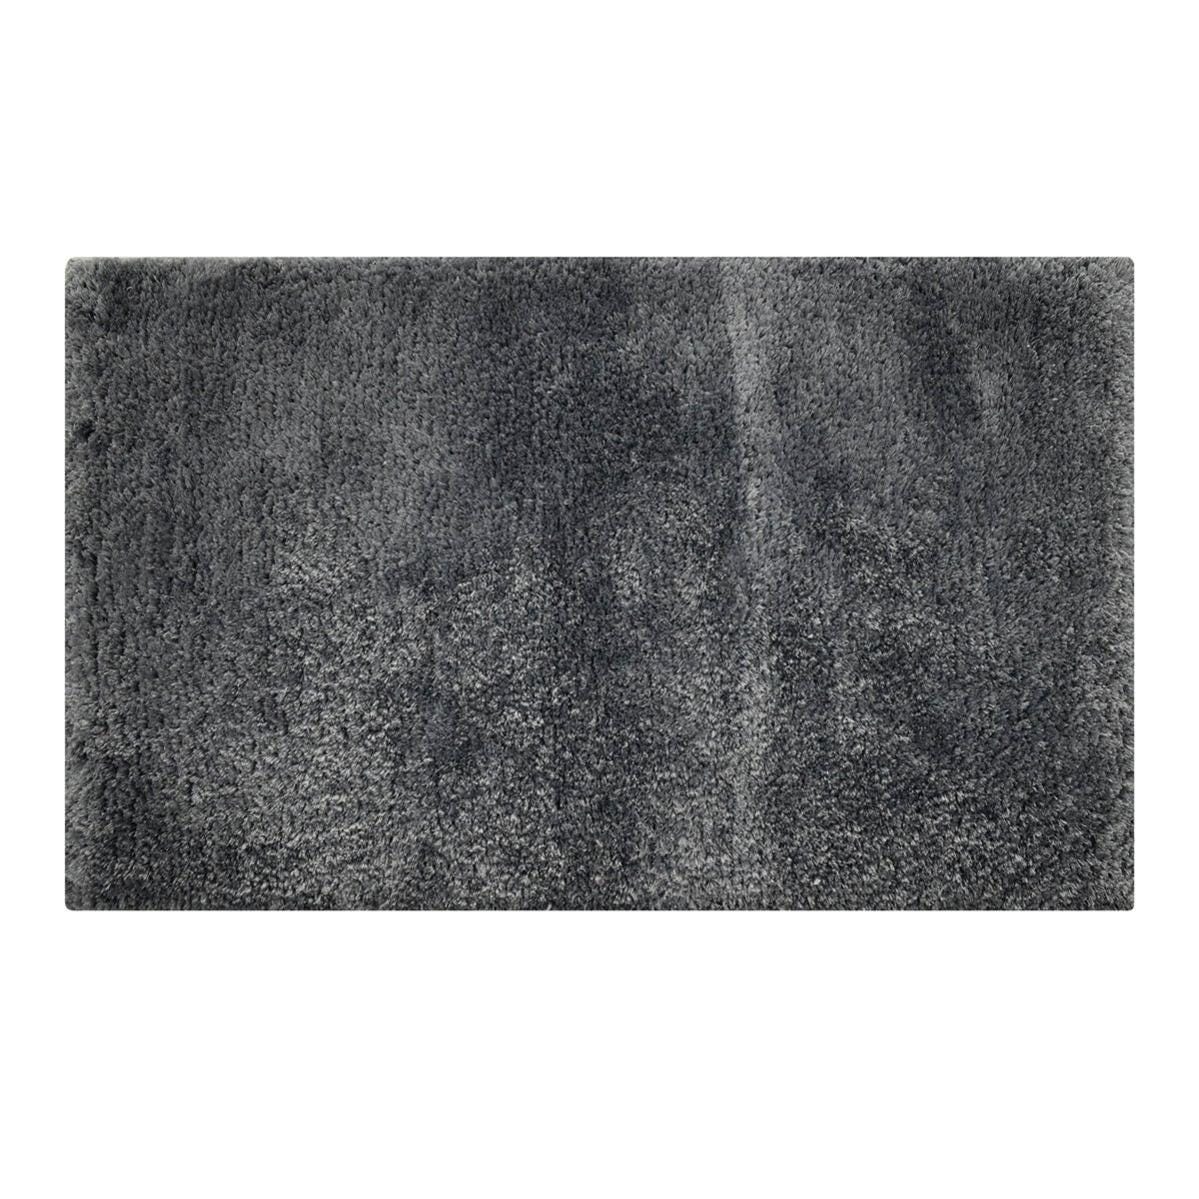 Tappeto moderno rettangolare 50x80cm nero bianco Blossom